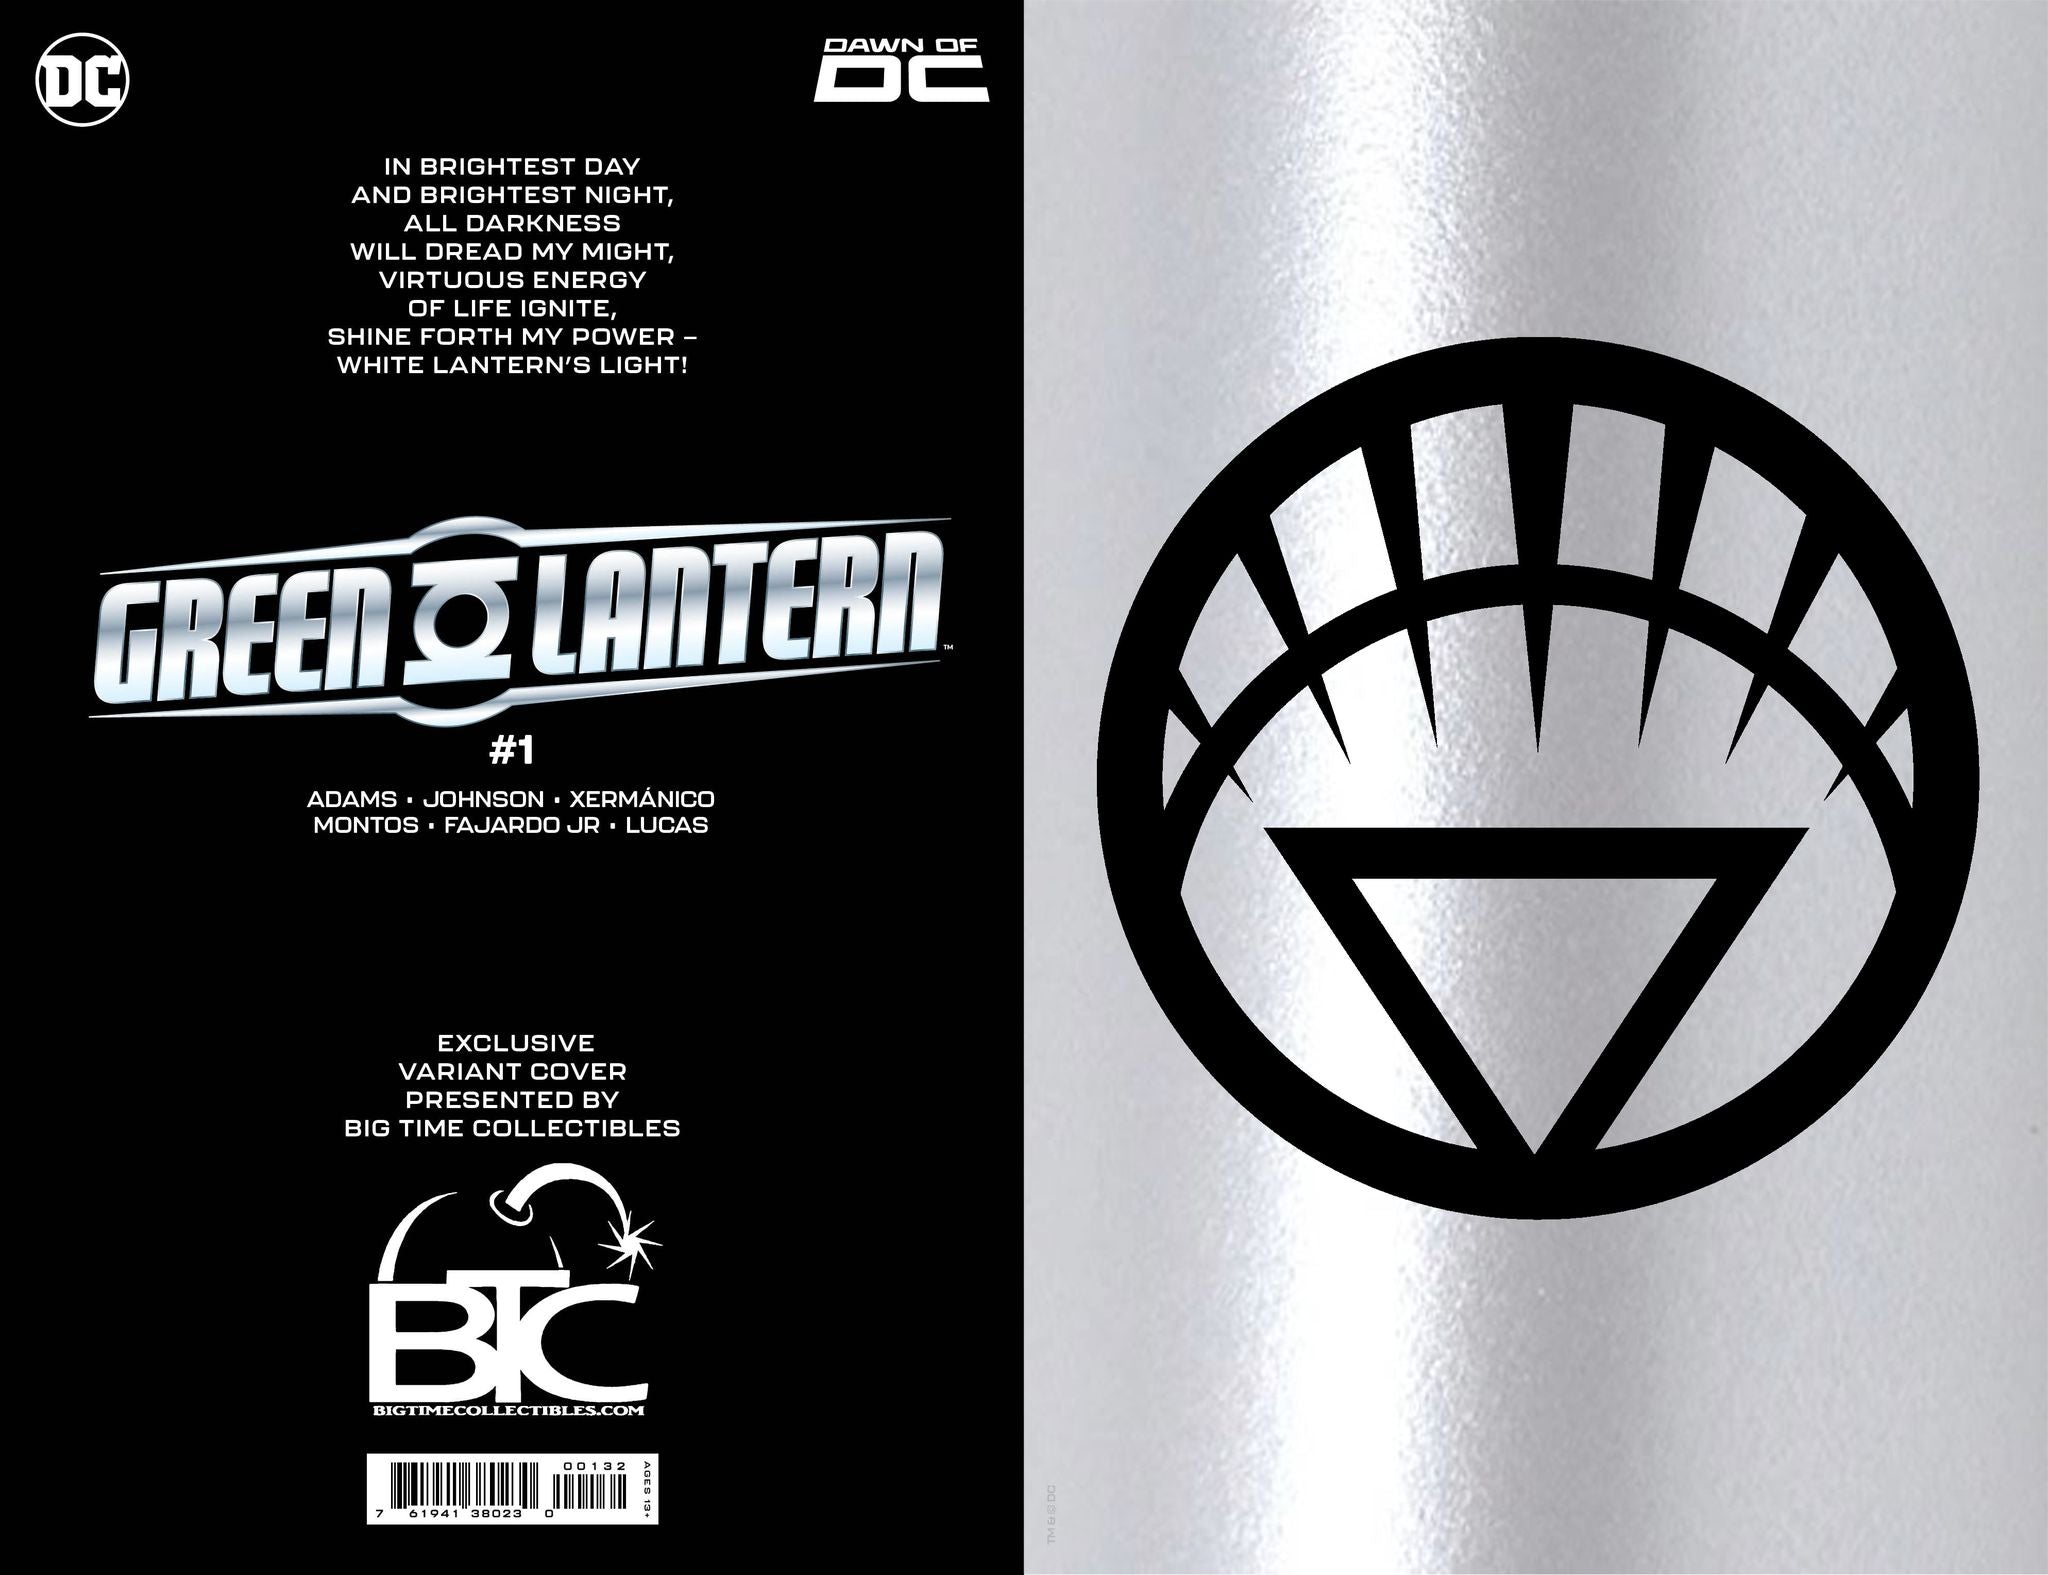 black lantern logo